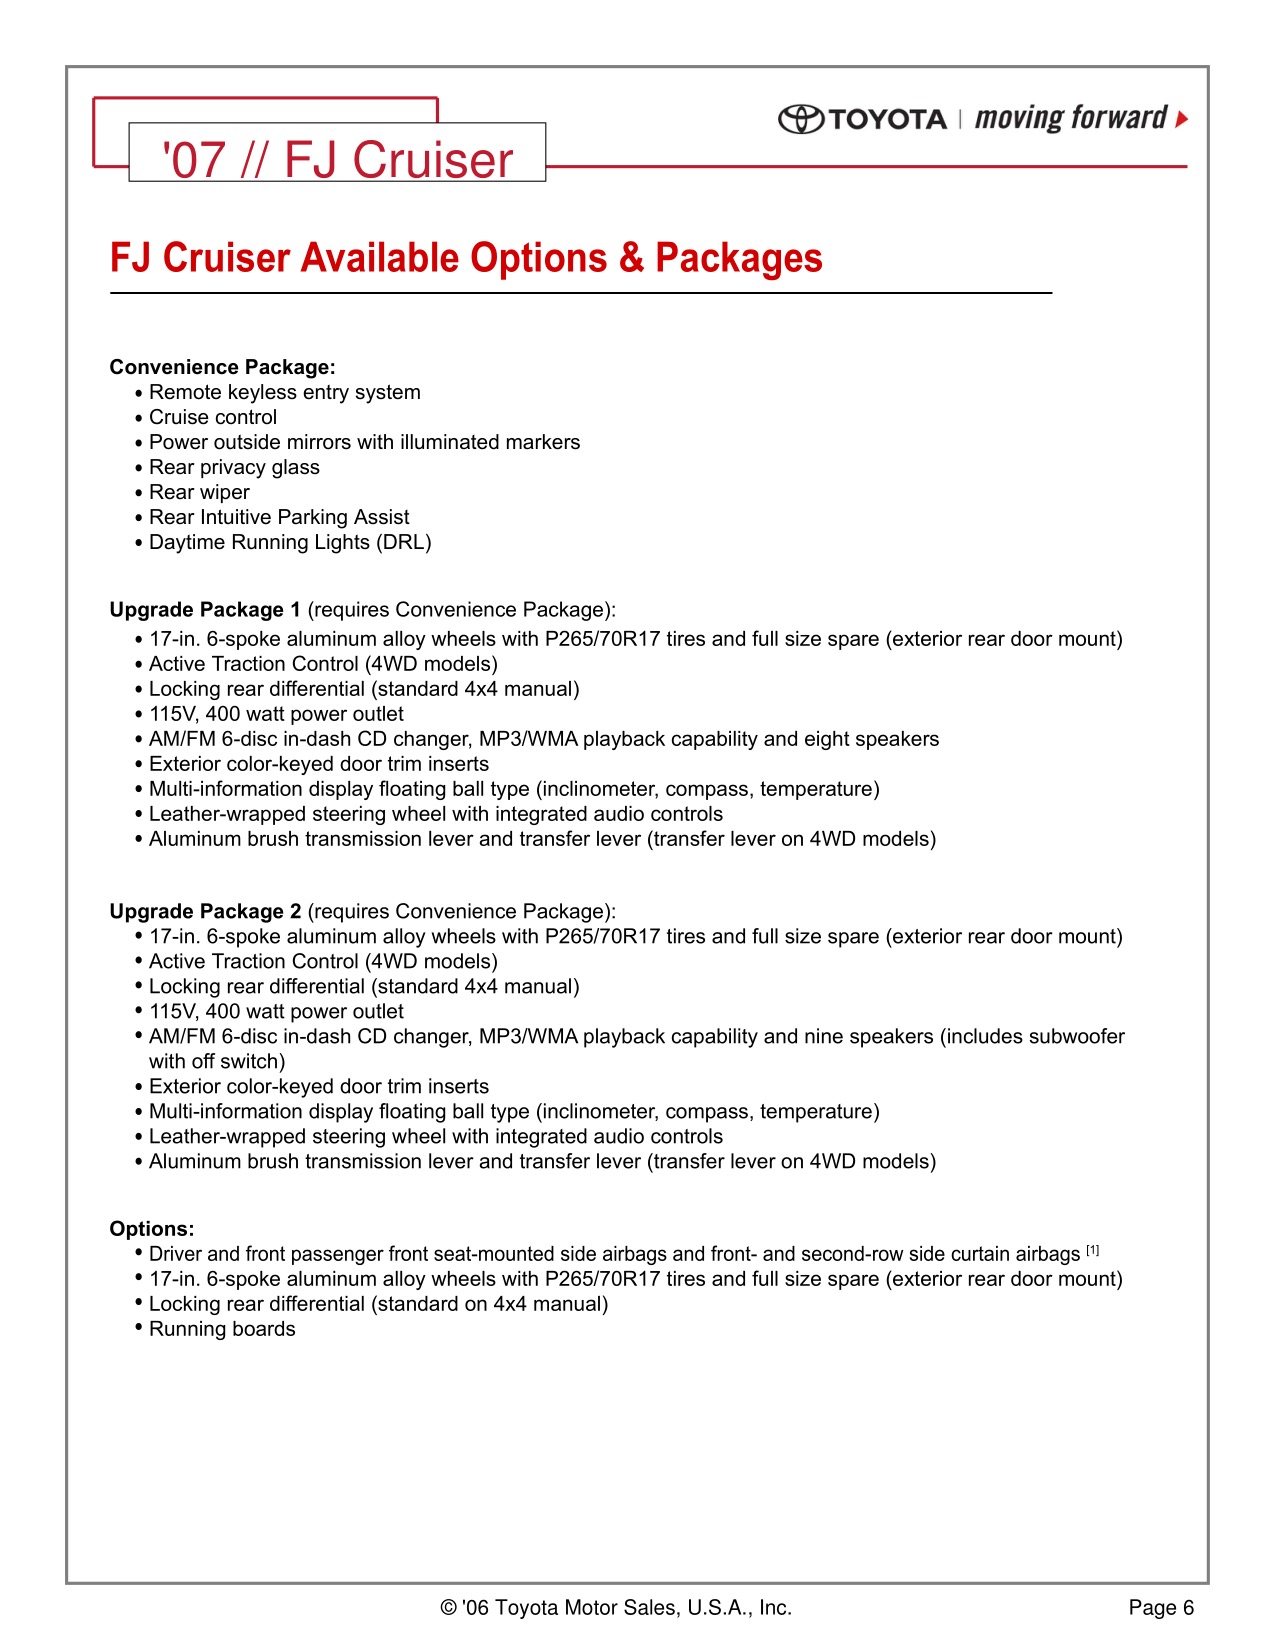 2009 Toyota FJ Cruiser Brochure Page 8